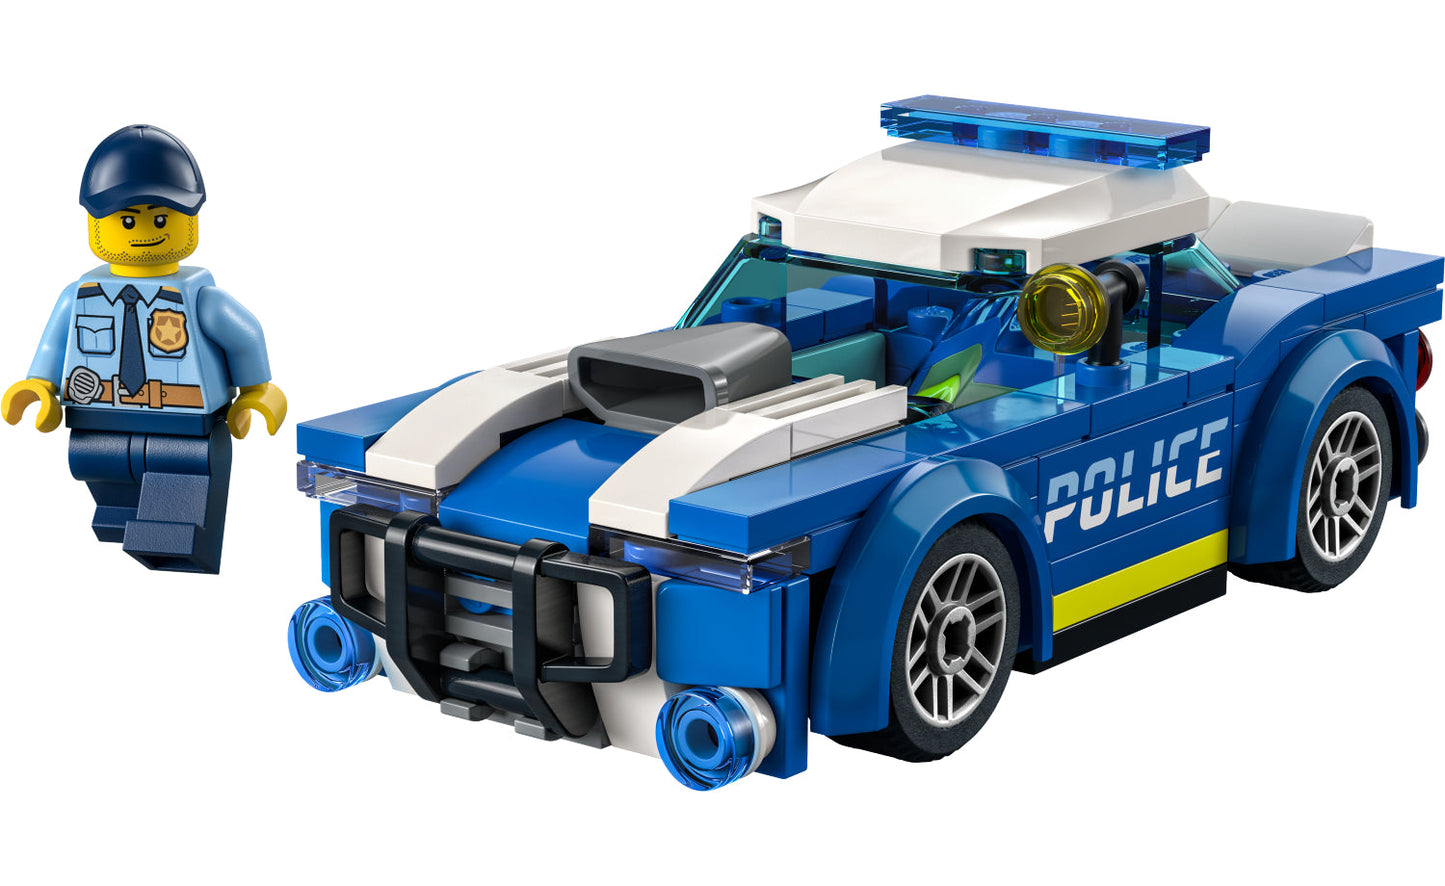 Lego City Police Car